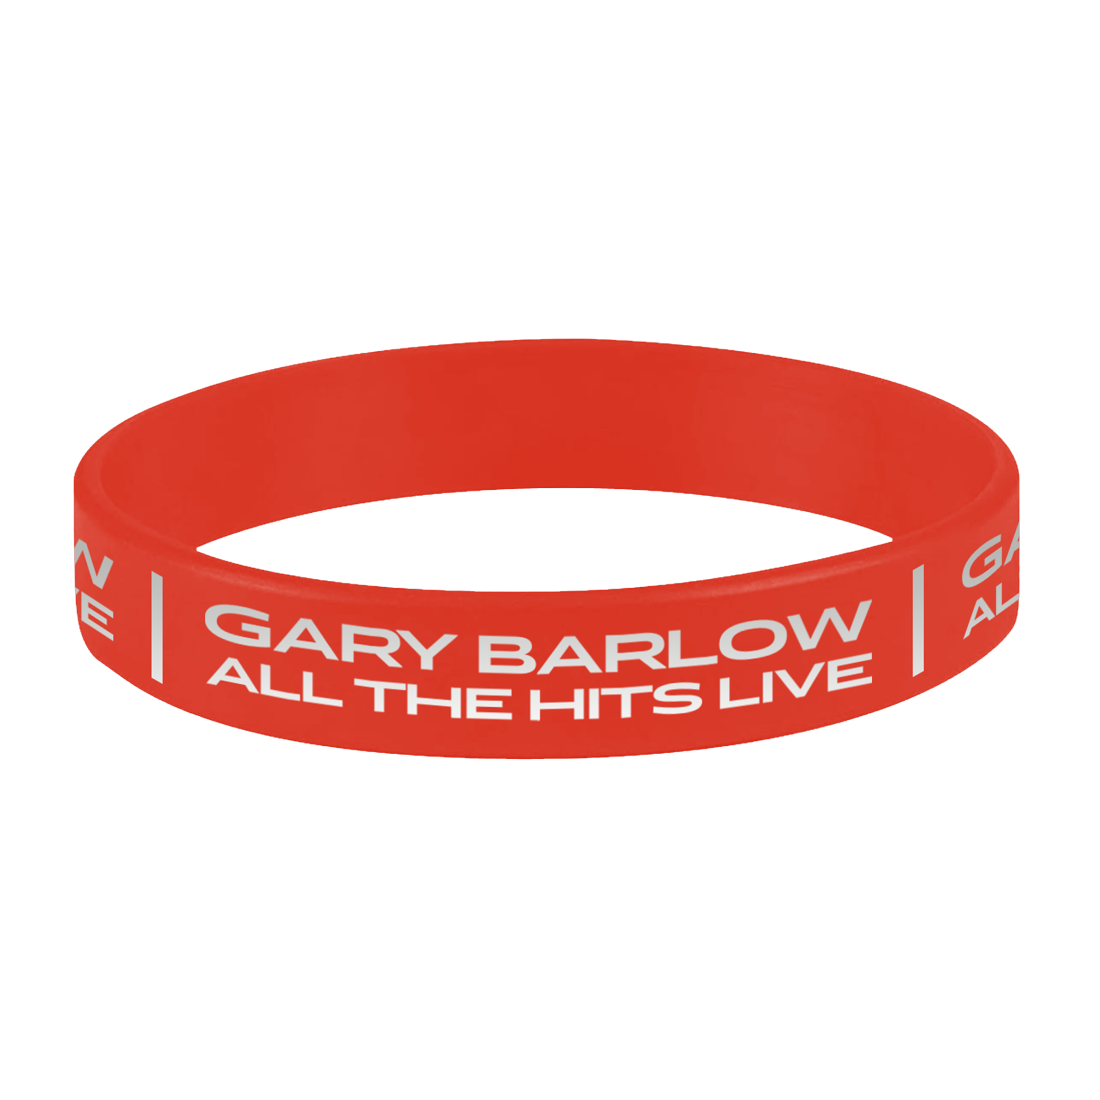 Gary Barlow - All The Hits Live Wristband